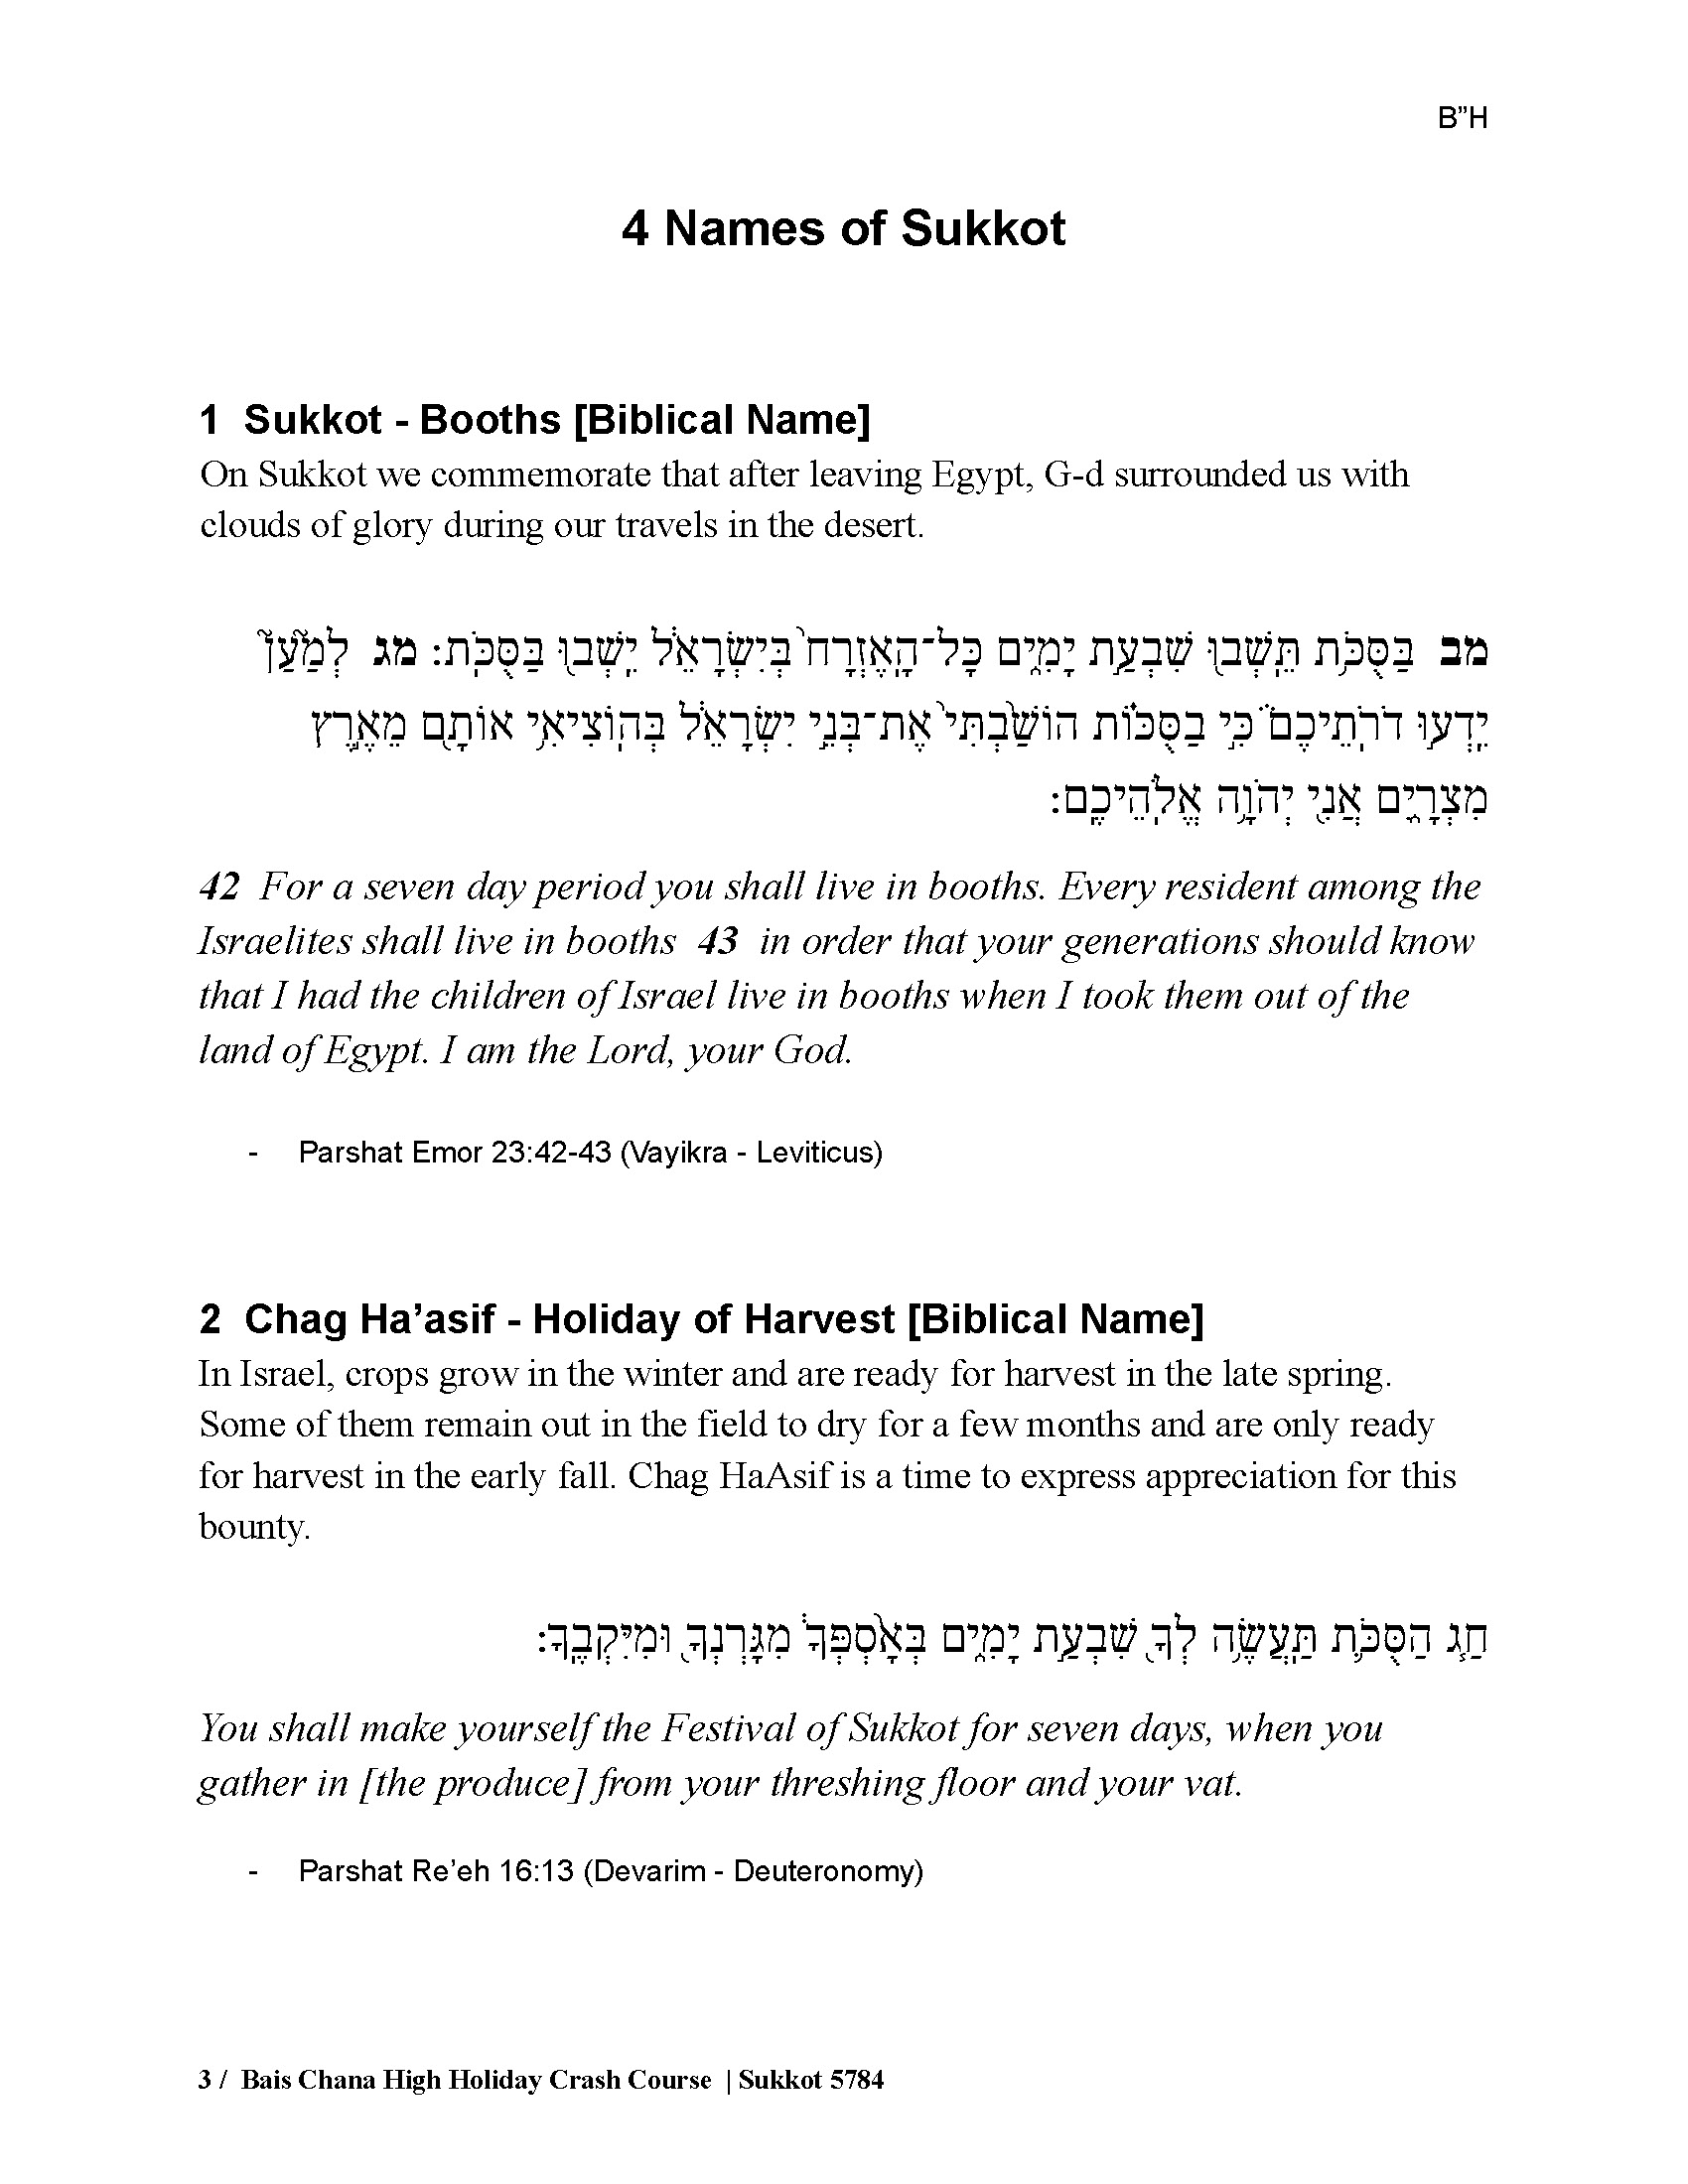 High Holidays 5784 - Sukkot crash course_Page_03